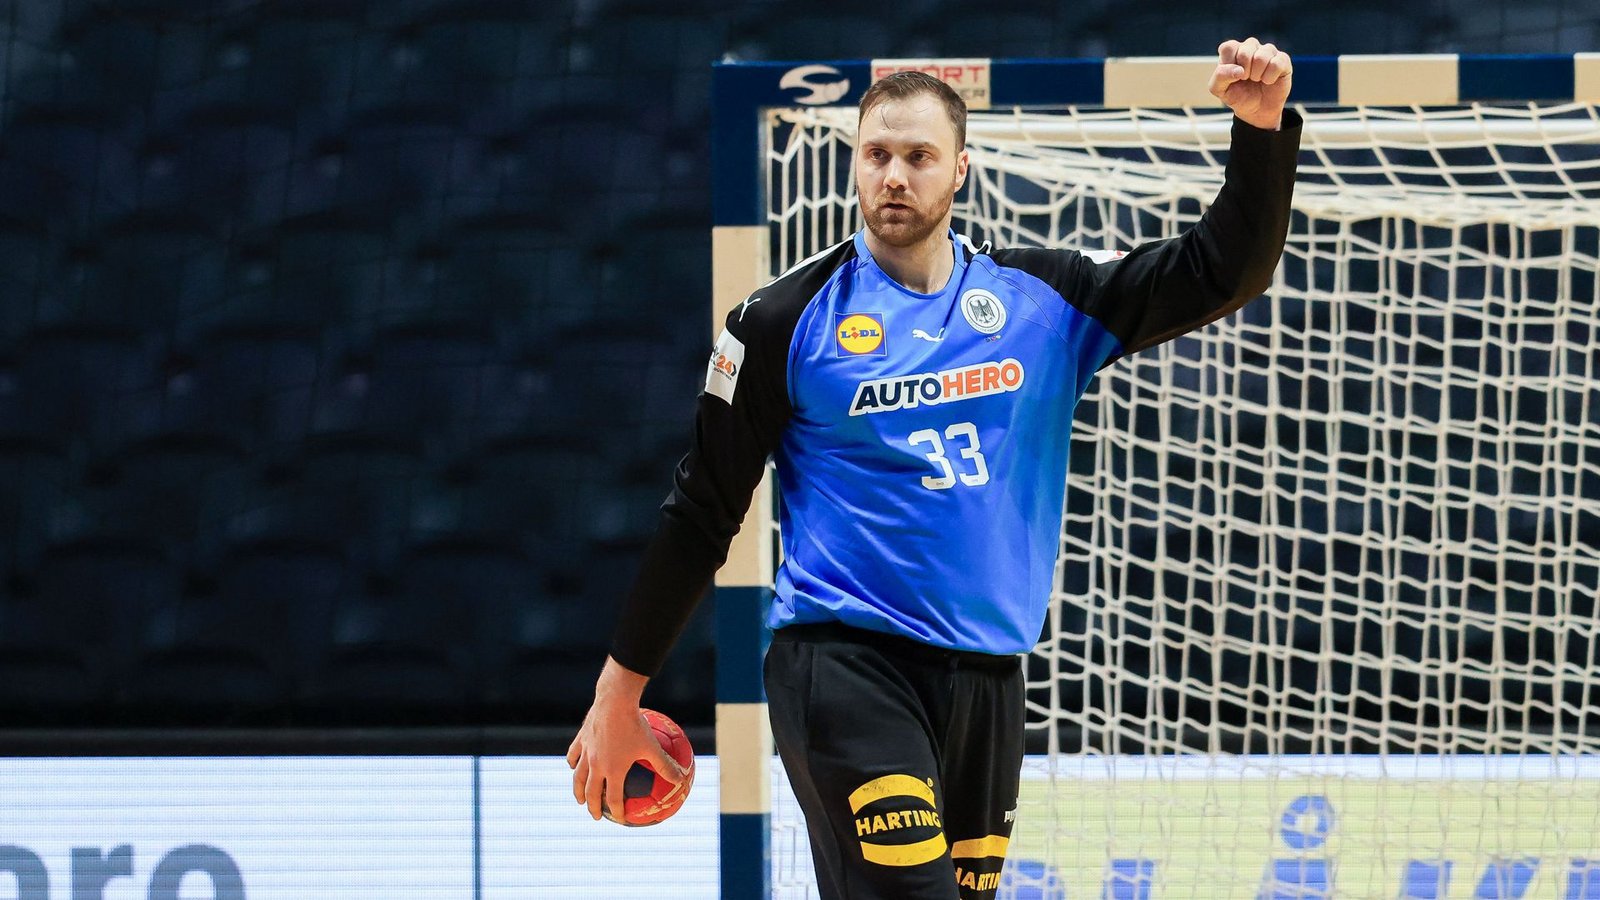 Deutschlands Handball-Torhüter Andreas Wolff jubelt beim Finalspiel gegen Ägypten. (Archivbild)Foto: dpa/Jan Woitas